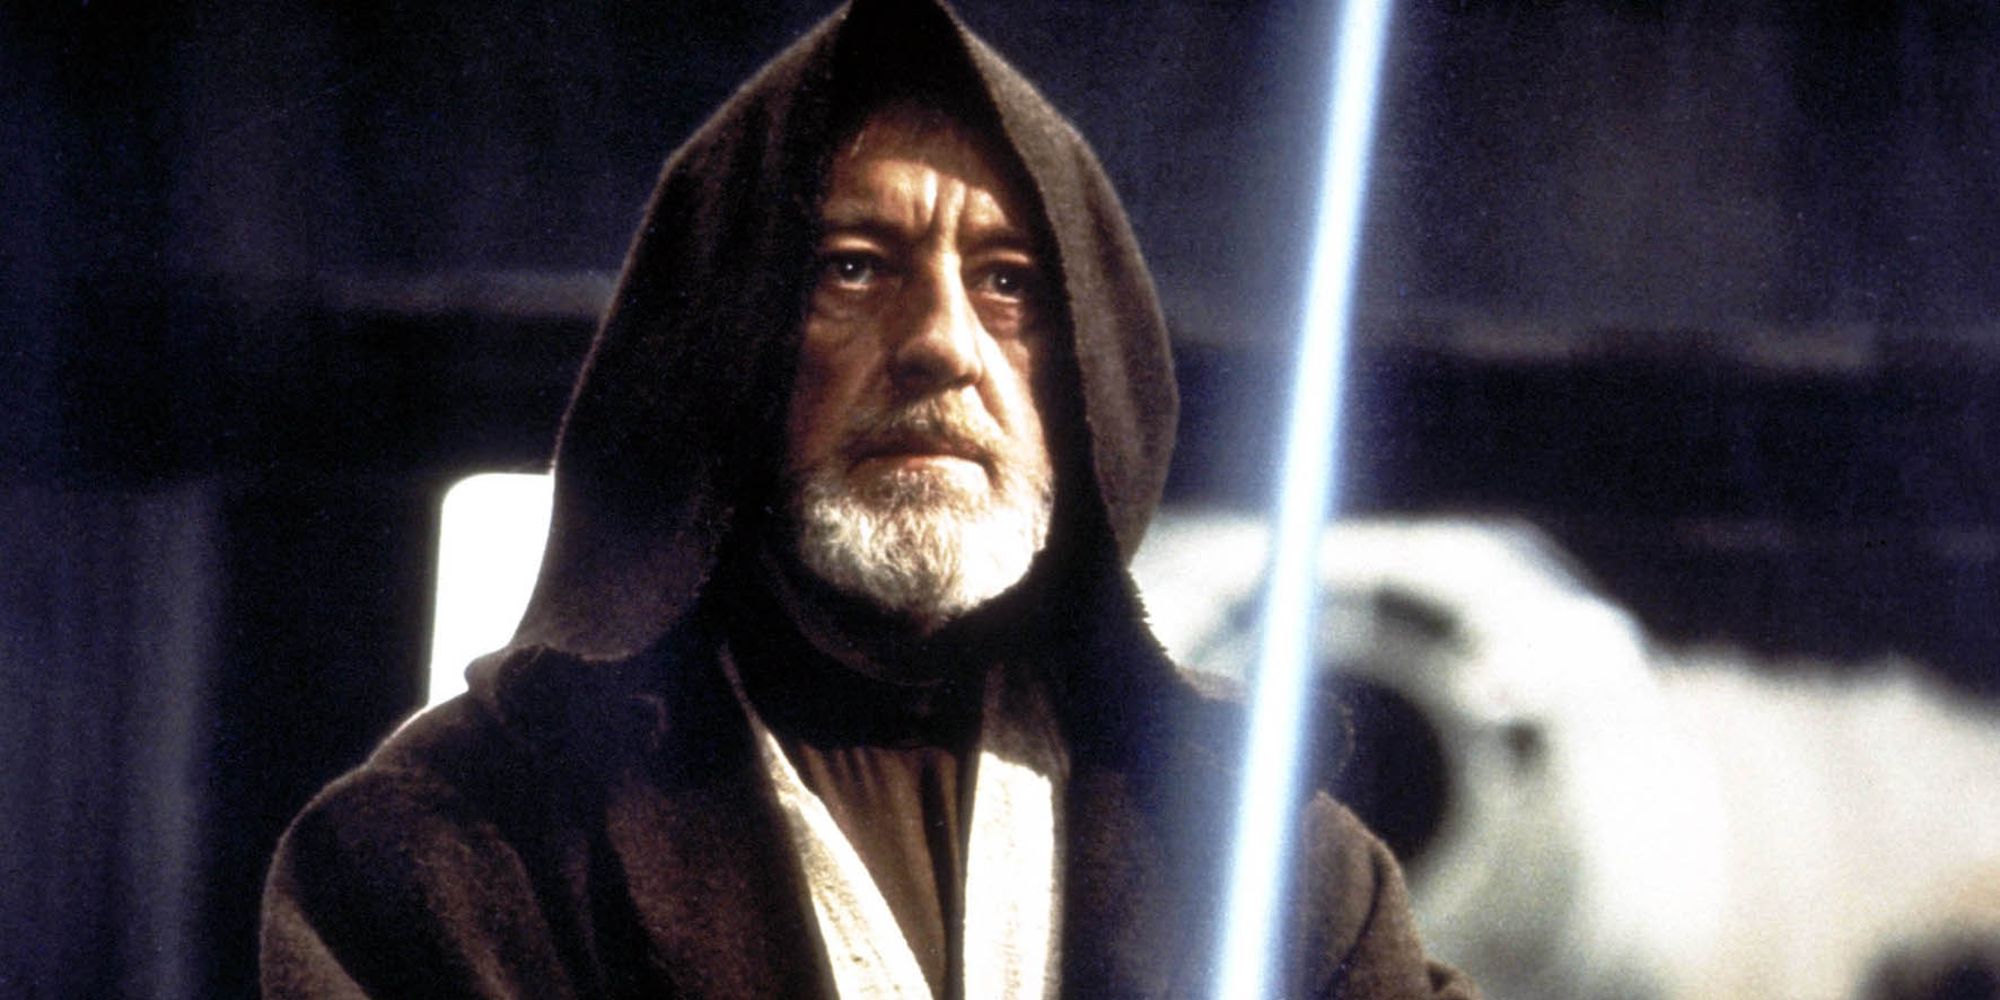 Obi Wan Kenobi holding his lightsaber on the Death Star in Star Wars A New Hope